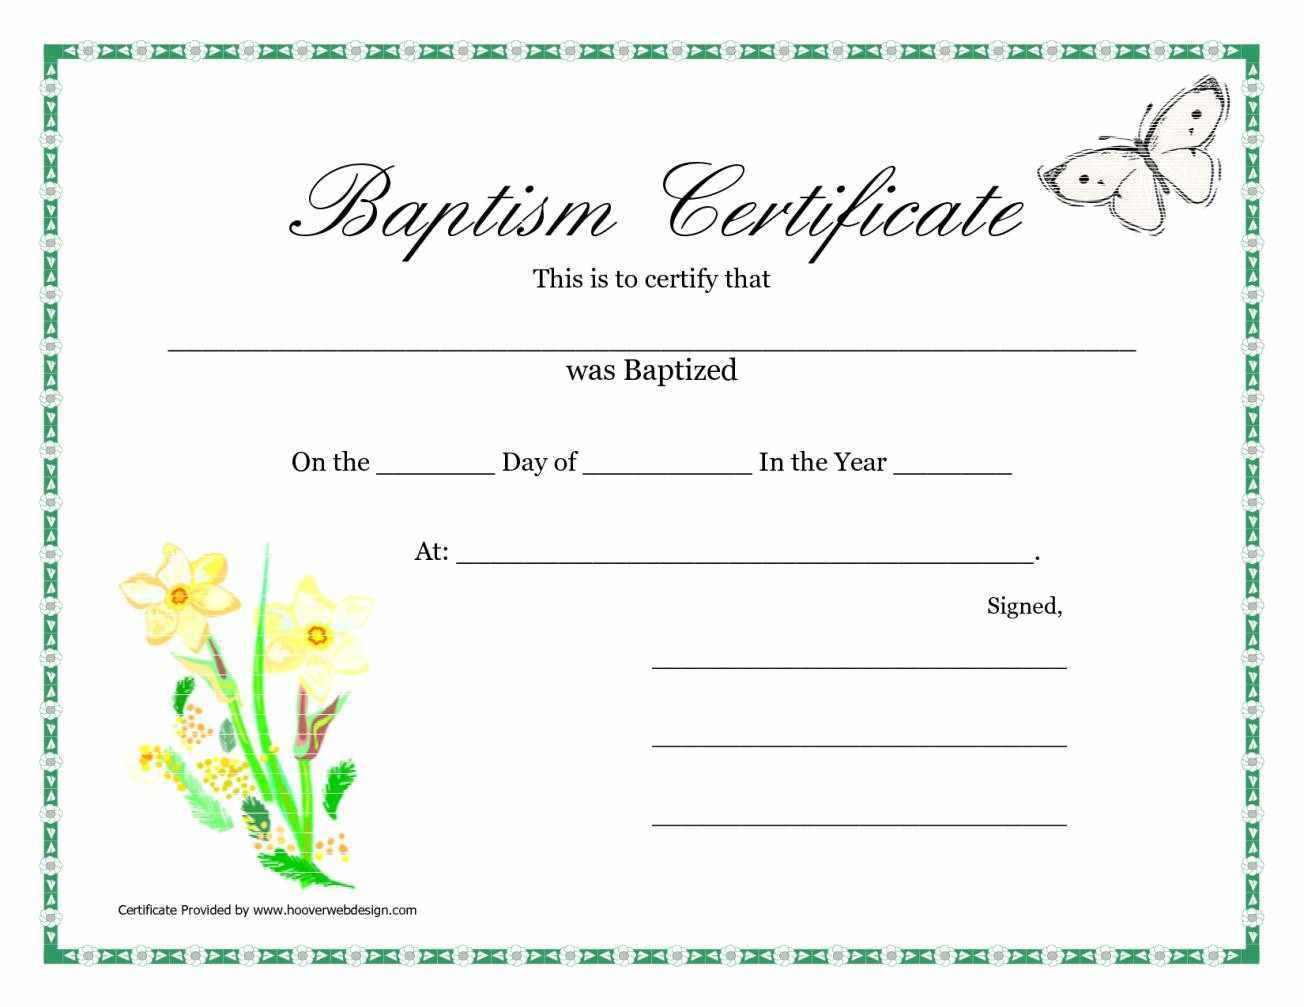 Sample Baptism Certificate Templates – Sample Certificate With Baptism Certificate Template Word